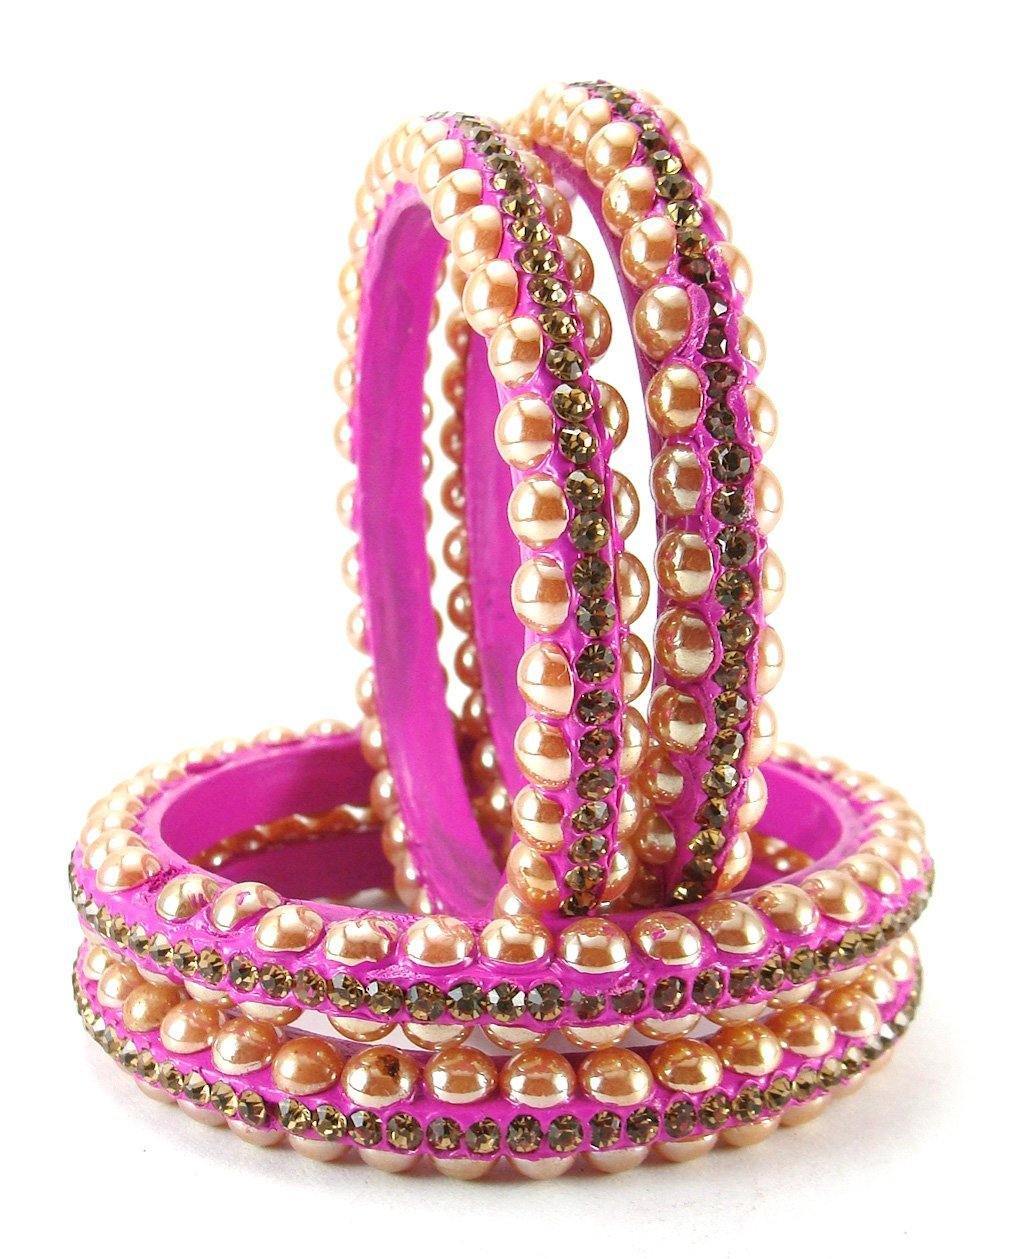 sukriti rajasthani contemporary pink lac bangles for women - set of 4